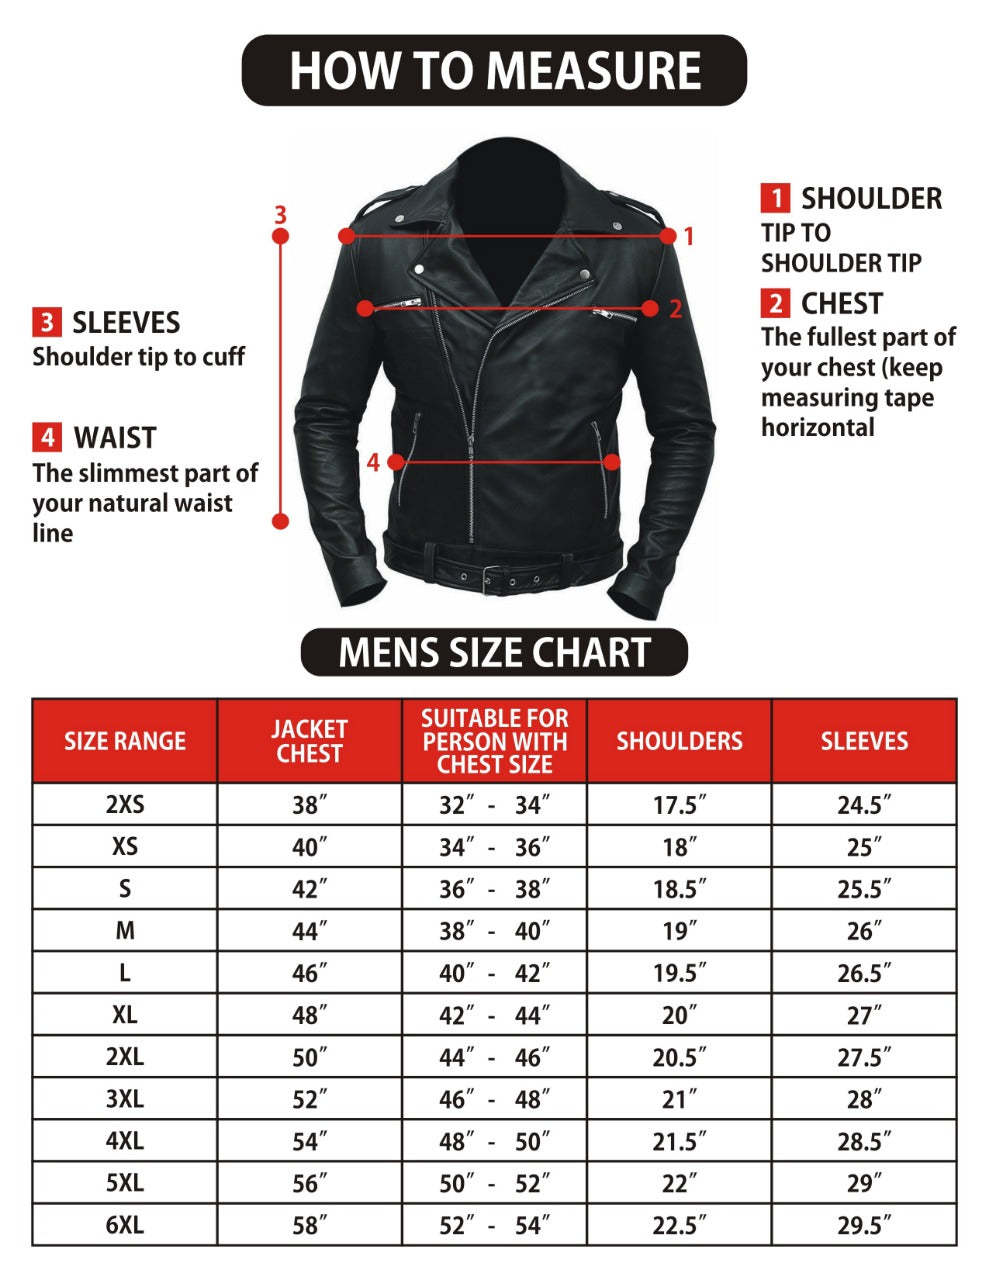 Spine Spark Men's Black Pure Leather Duffle Hood Coat & Jacket